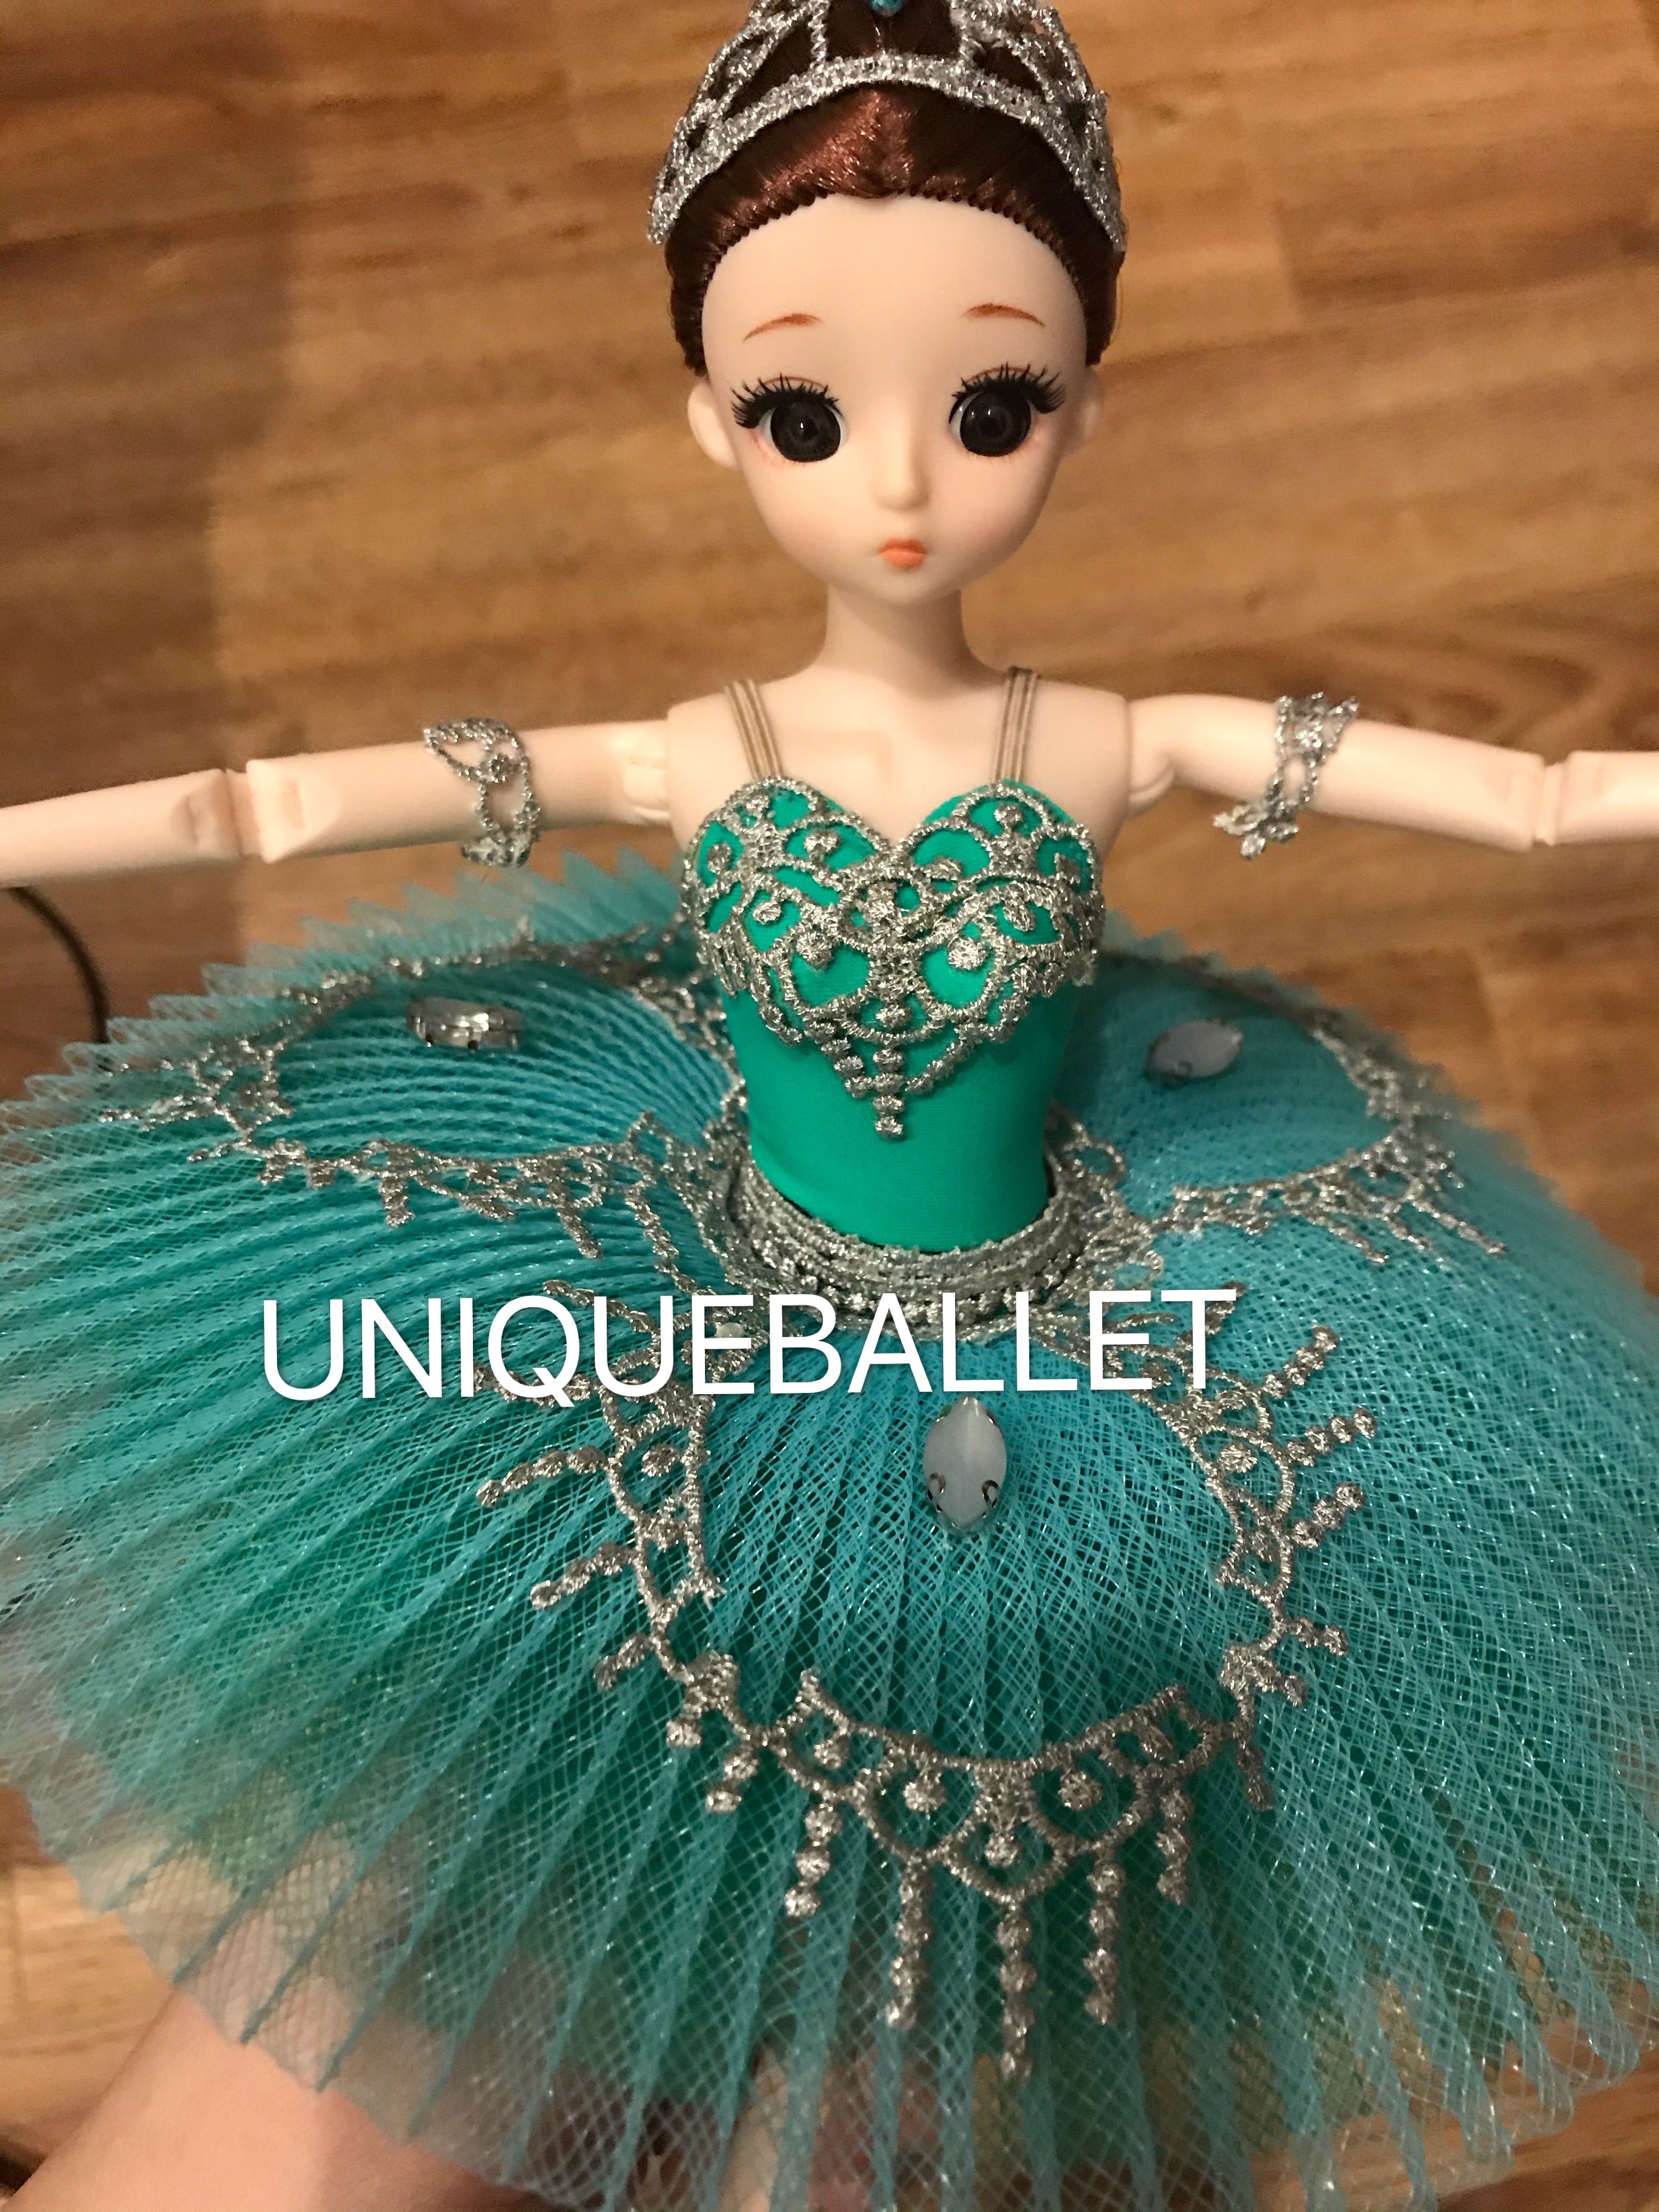 Exclusive Customized Design Ballerina Gift Ballet Dolls Wearing Tutus Gift For Ballet Lovers